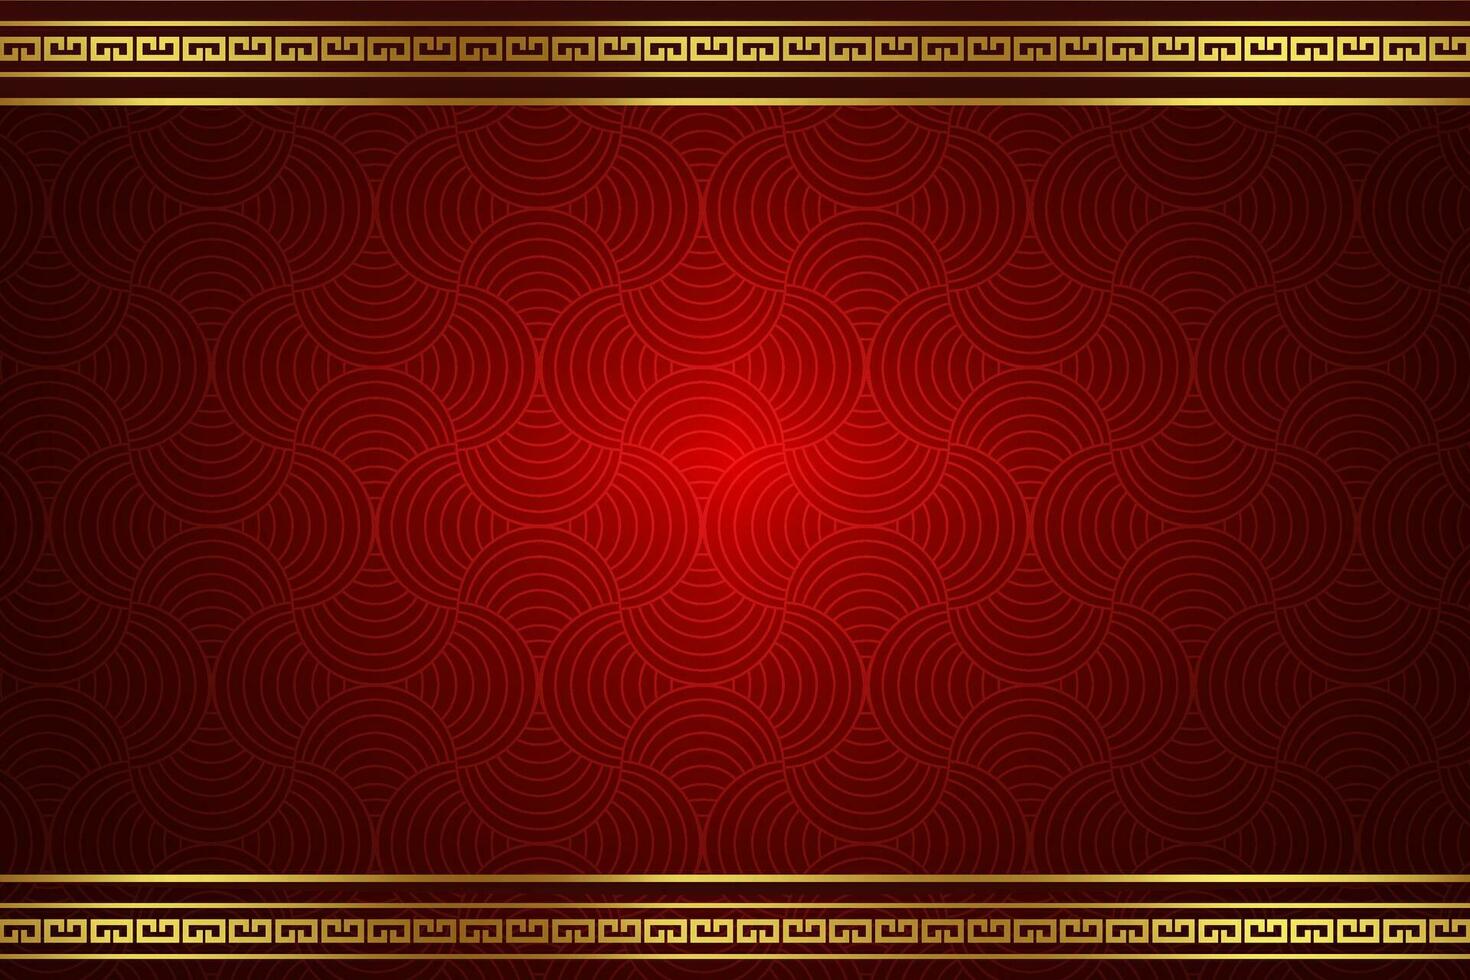 chino nuevo año estilo oriental antecedentes rojo oro marco ventana para tu texto espacio zona sin costura modelo modelo vector